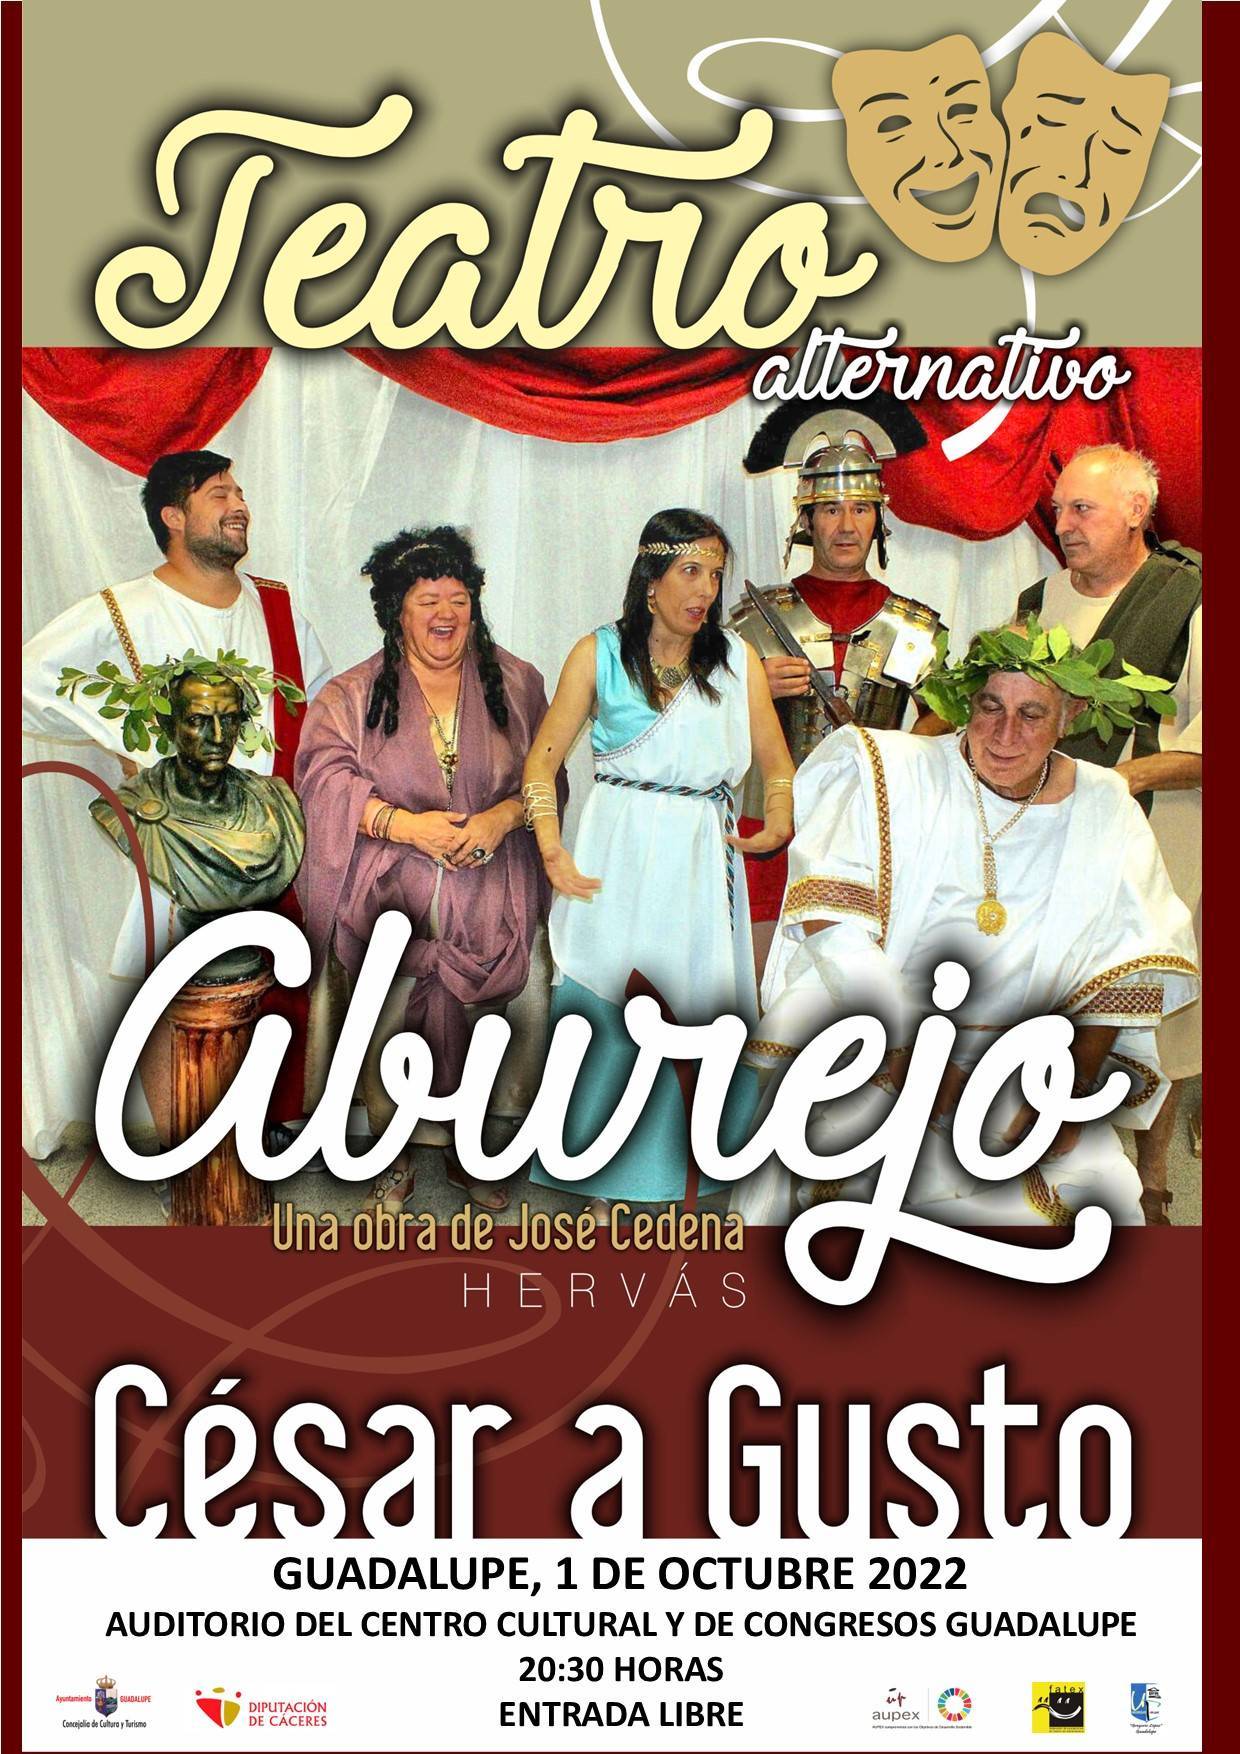 'César a Gusto' (2022) - Guadalupe (Cáceres)